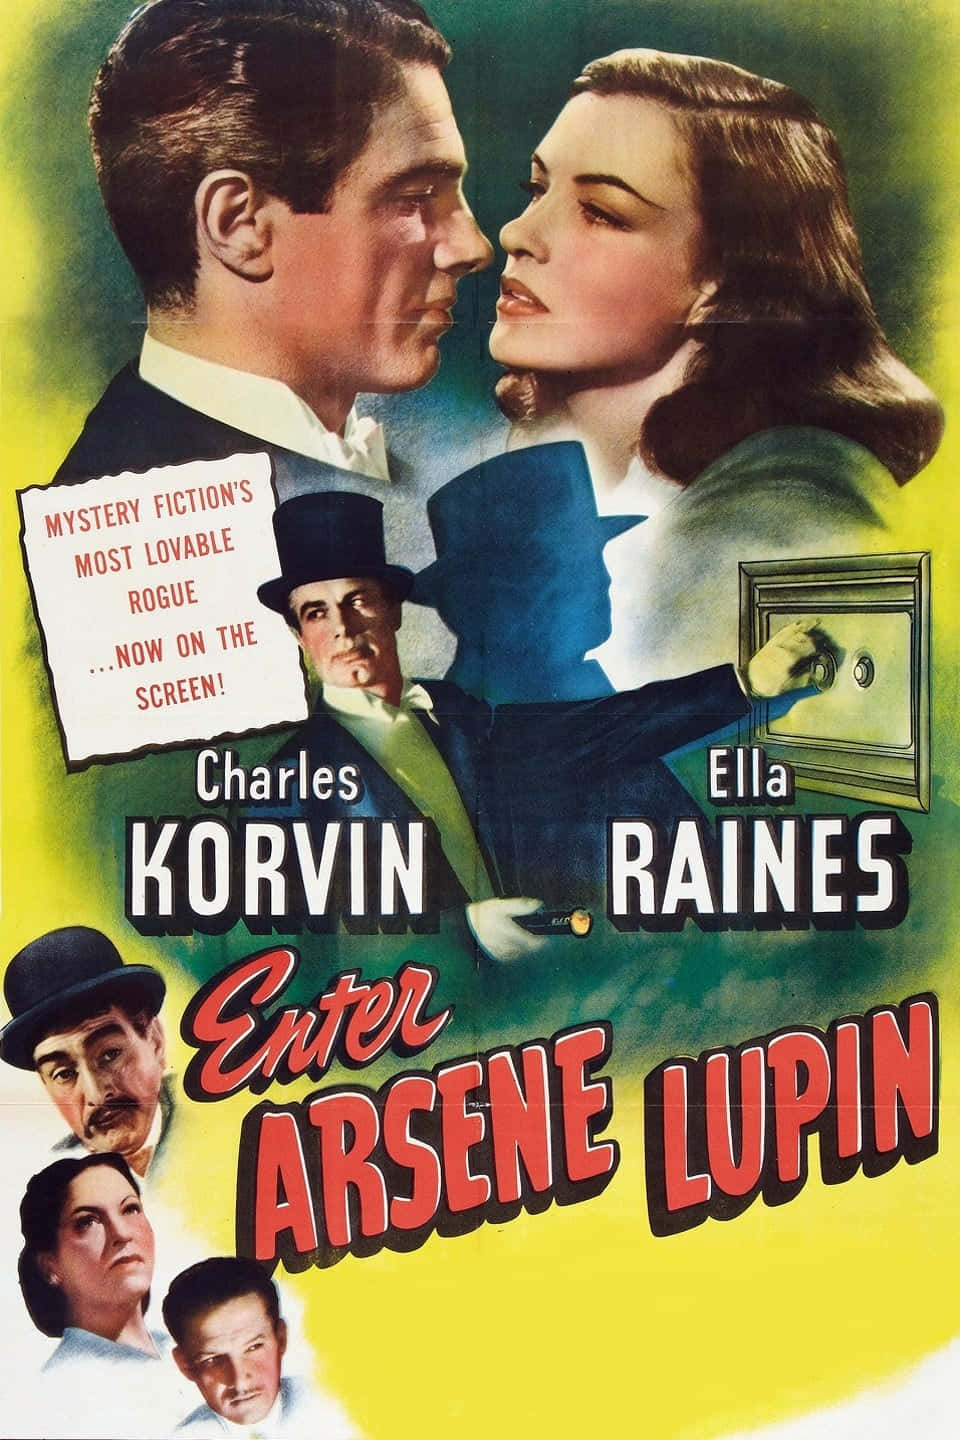 The Charismatic Gentleman Thief, Arsène Lupin Wallpaper